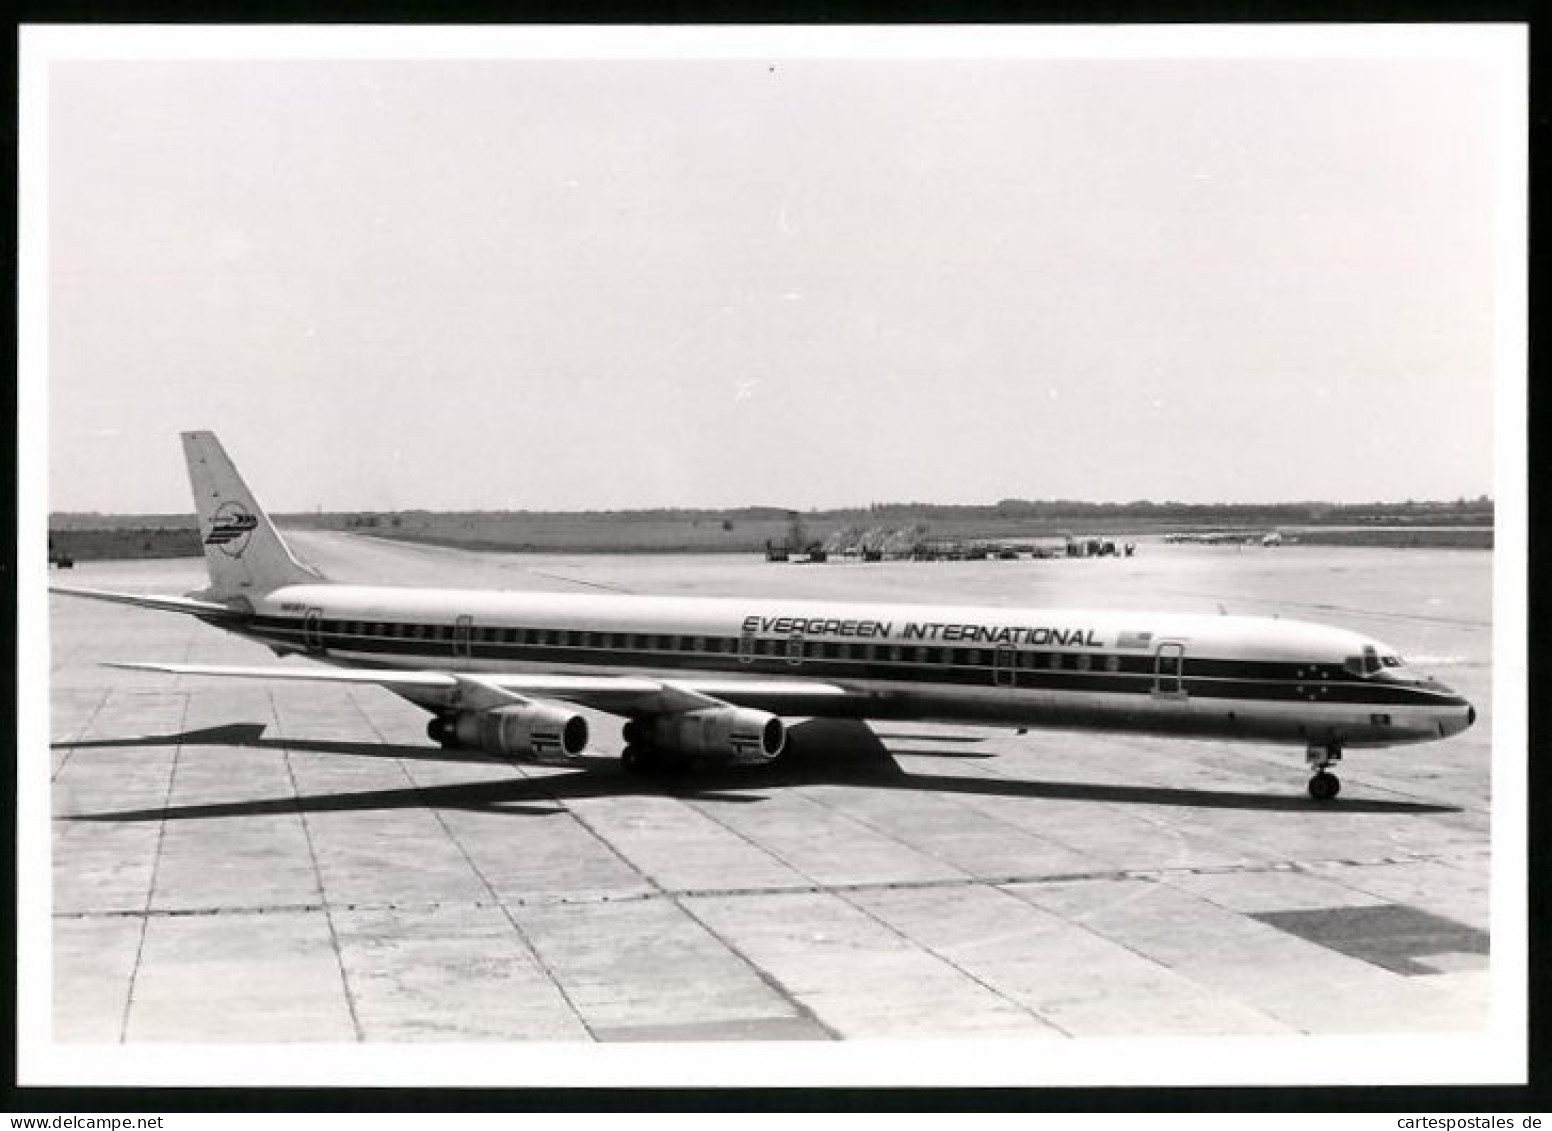 Fotografie Flugzeug Douglas DC-8, Passagierflugzeug Der Evergreen International, Kennung N810EV  - Aviation